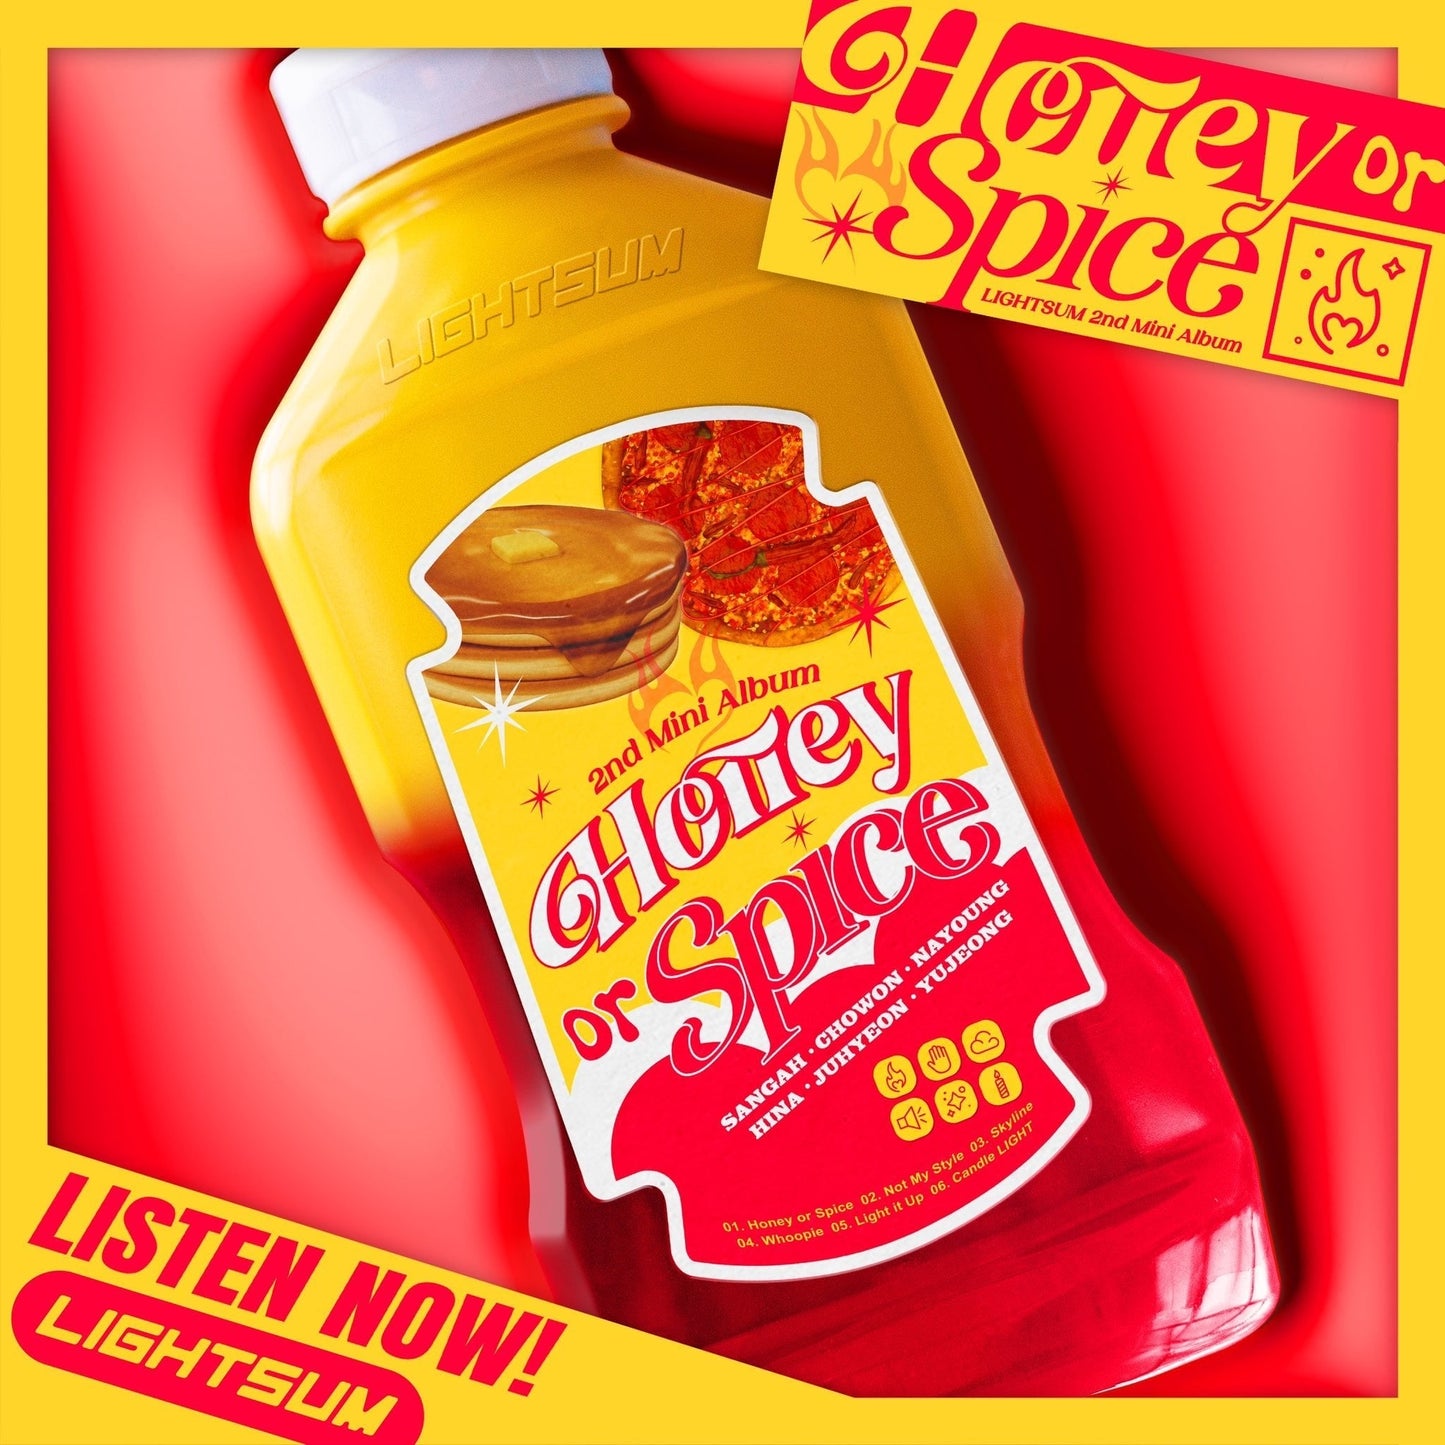 Lightsum • Honey or Spice